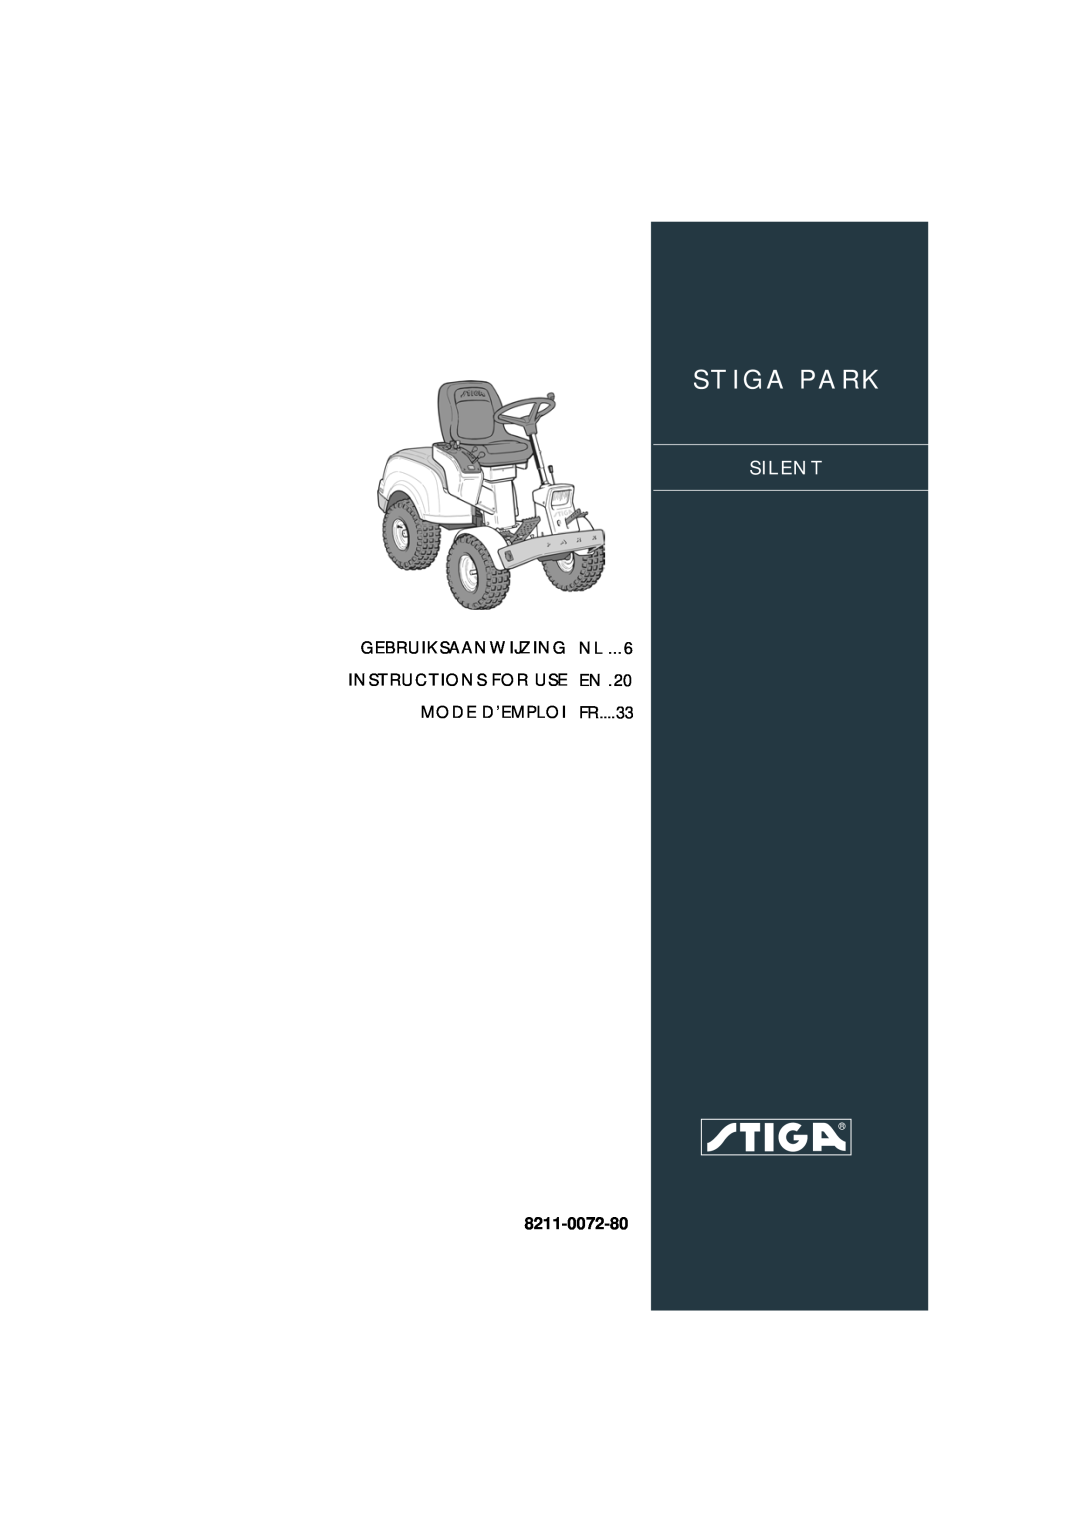 Stiga 8211-0072-80 manual Stiga Park, Silent, Gebruiksaanwijzing Nl, INSTRUCTIONS FOR USE EN . MODE D’EMPLOI FR....33 